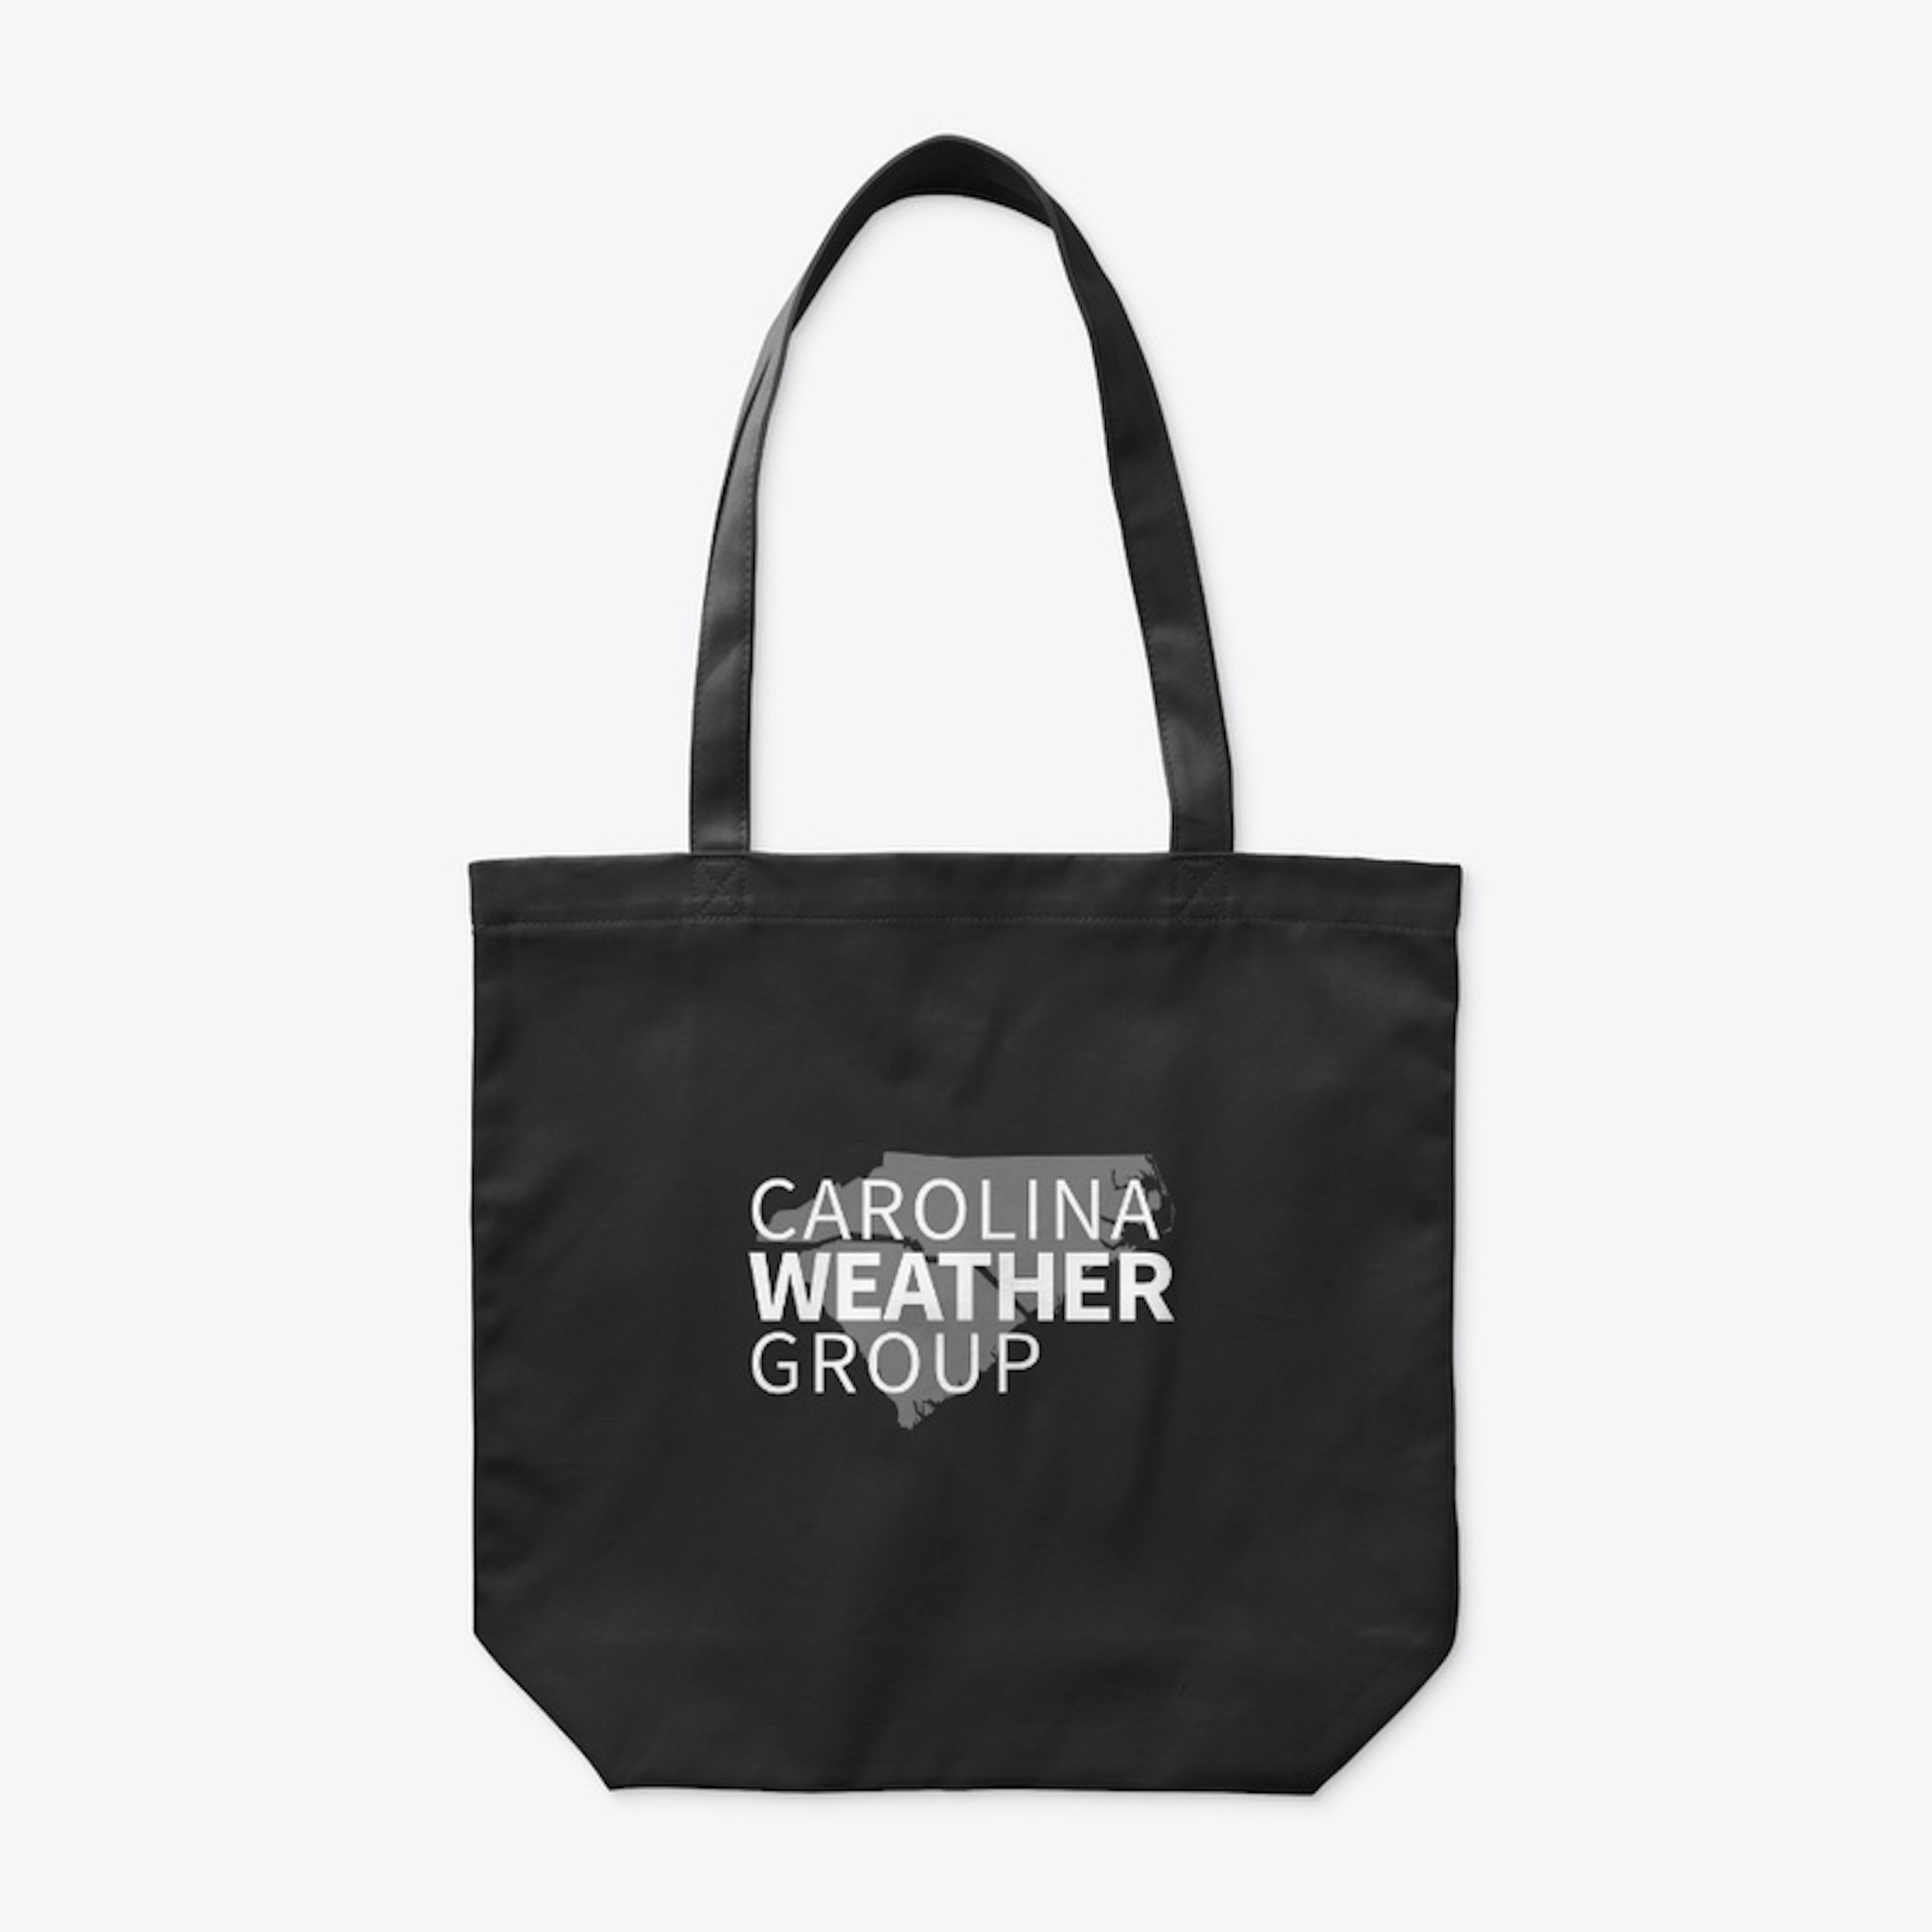 Carolina Weather Group collection